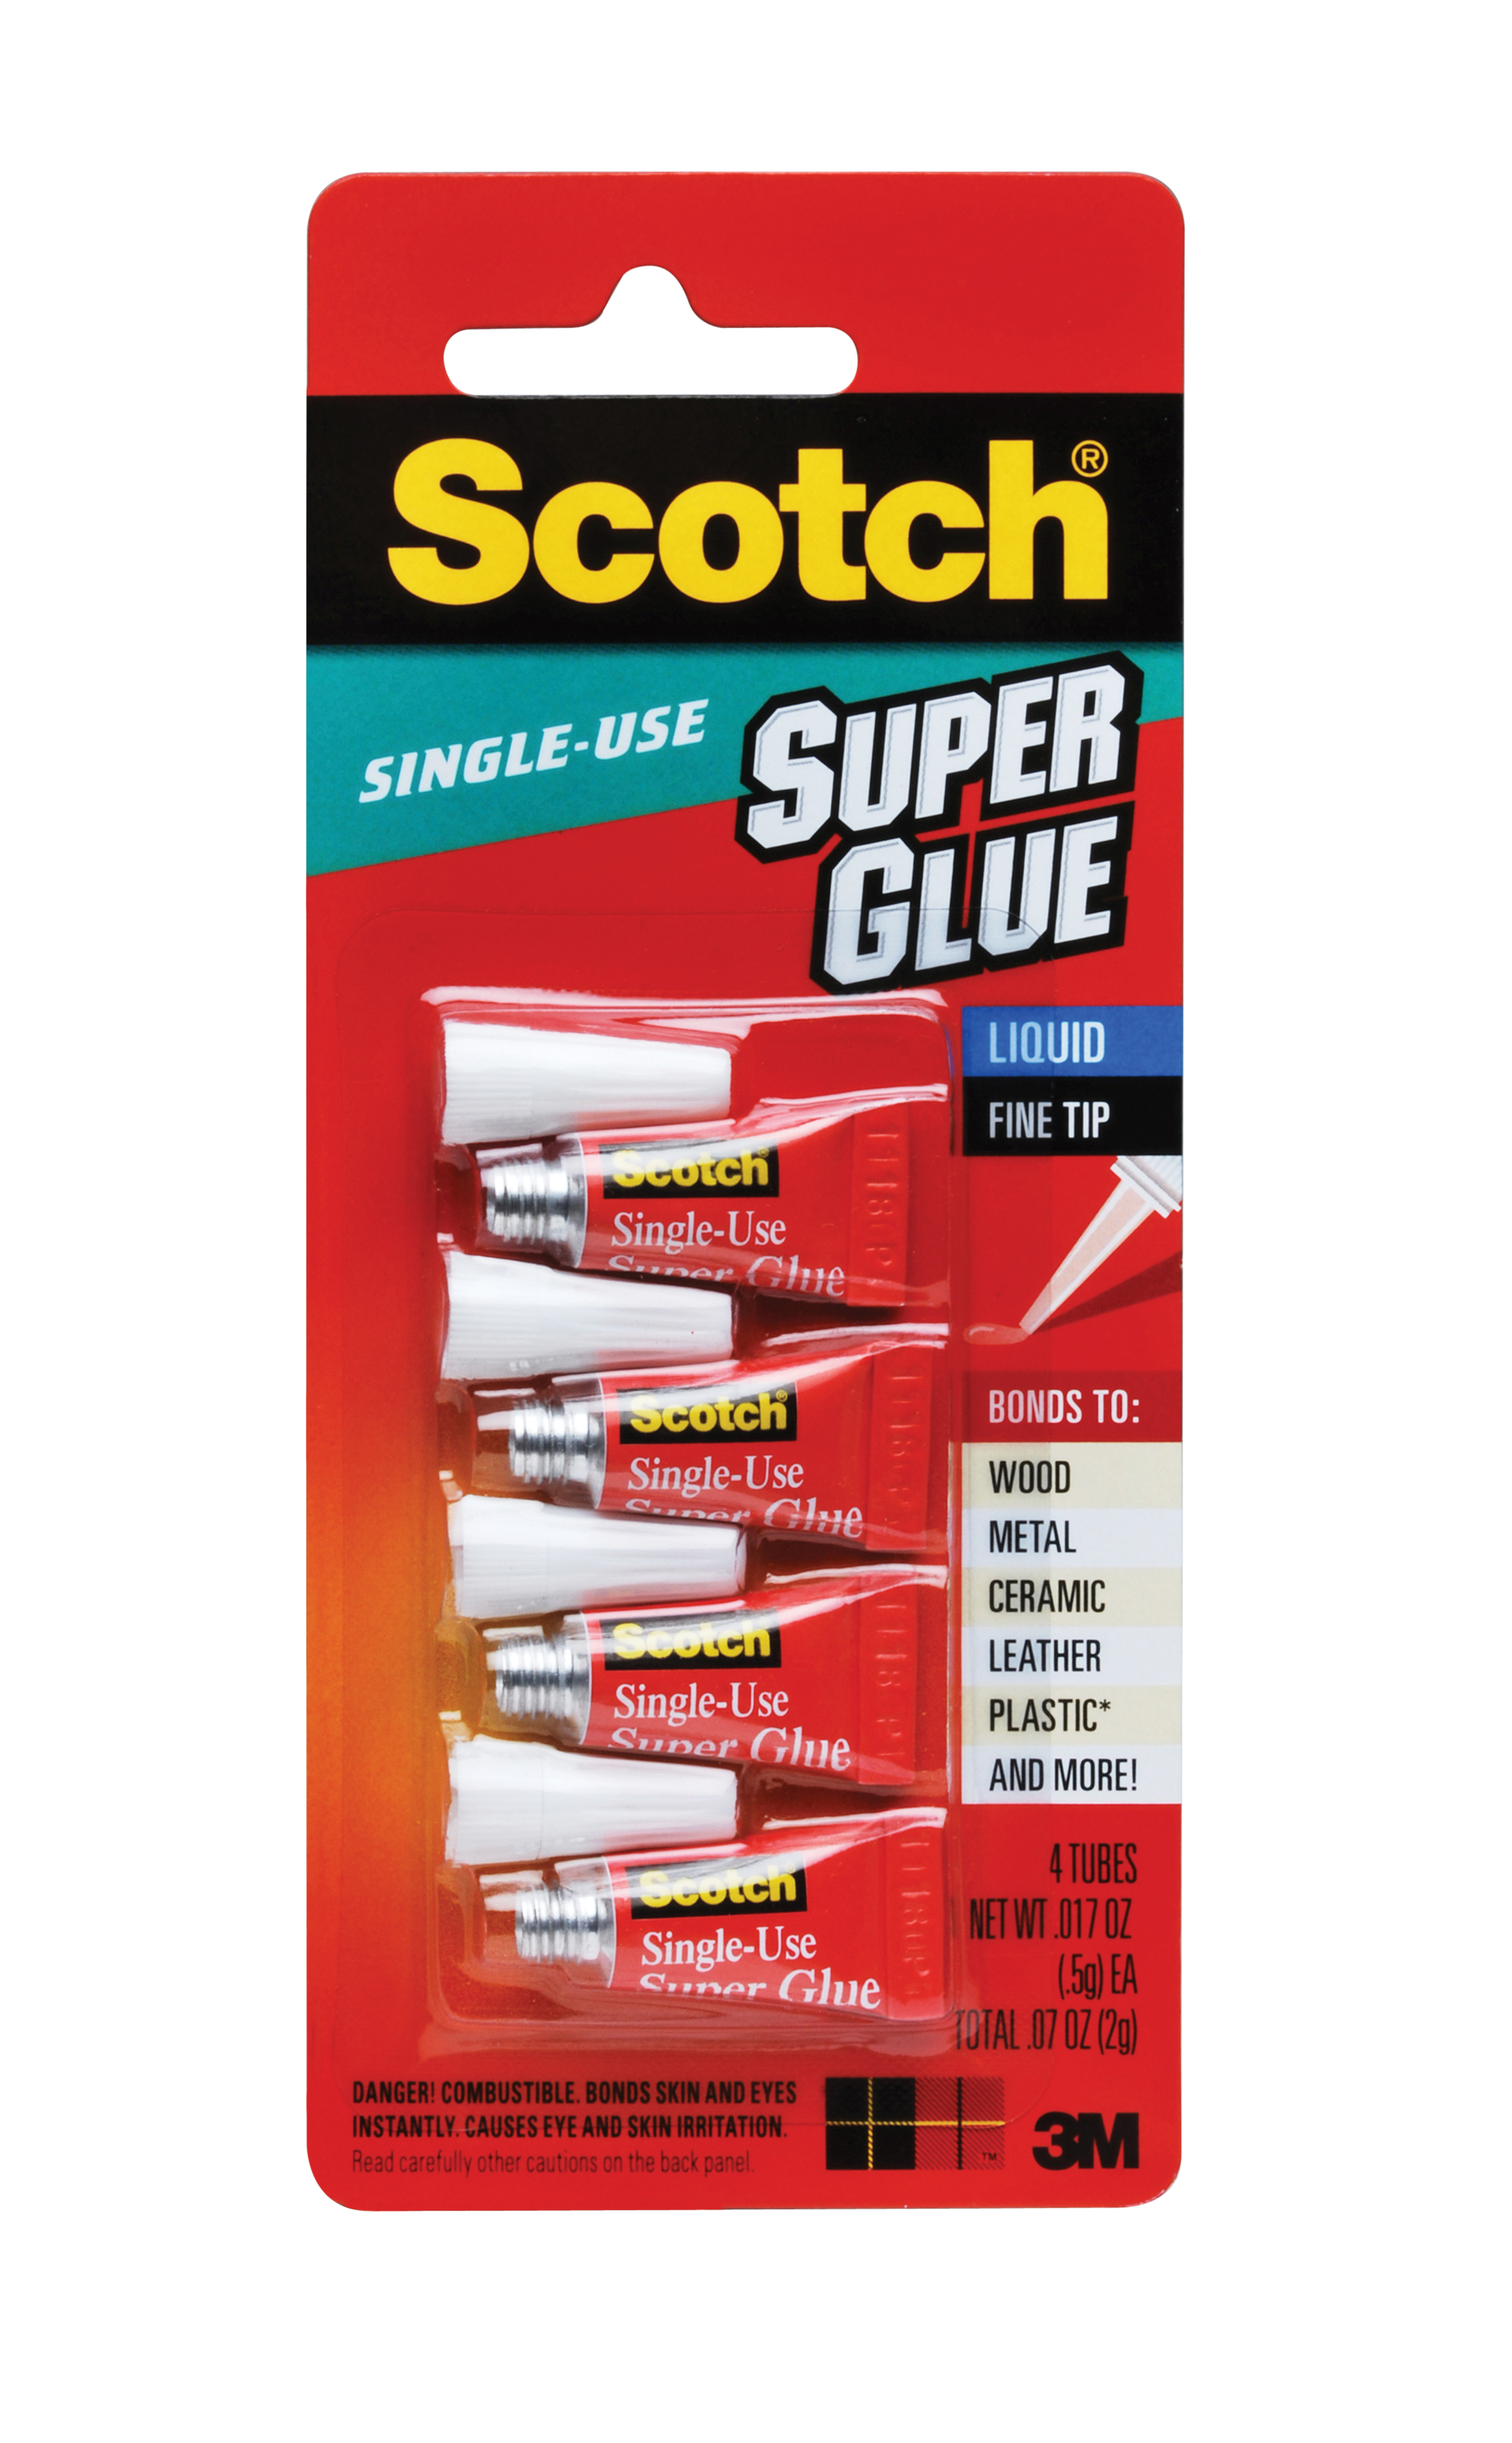 Scotch Super Glue Liquid Ad114 4 Pack Of Single Use Tubes 017 Oz Each Aircraft Products Na